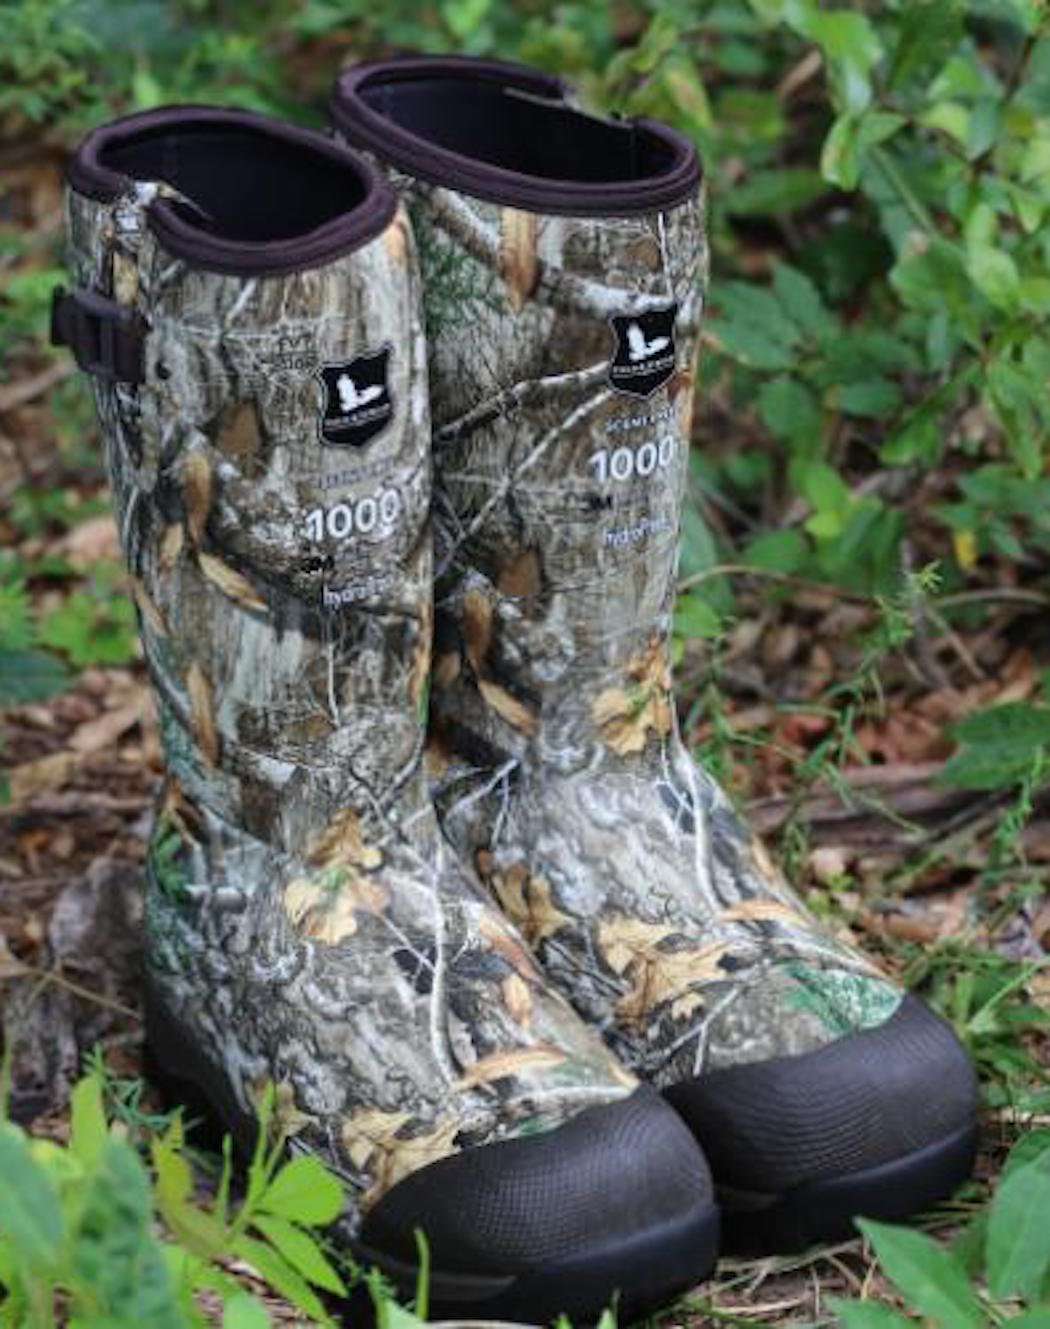 Field & Stream Swamptracker Waterproof Hunting Boots